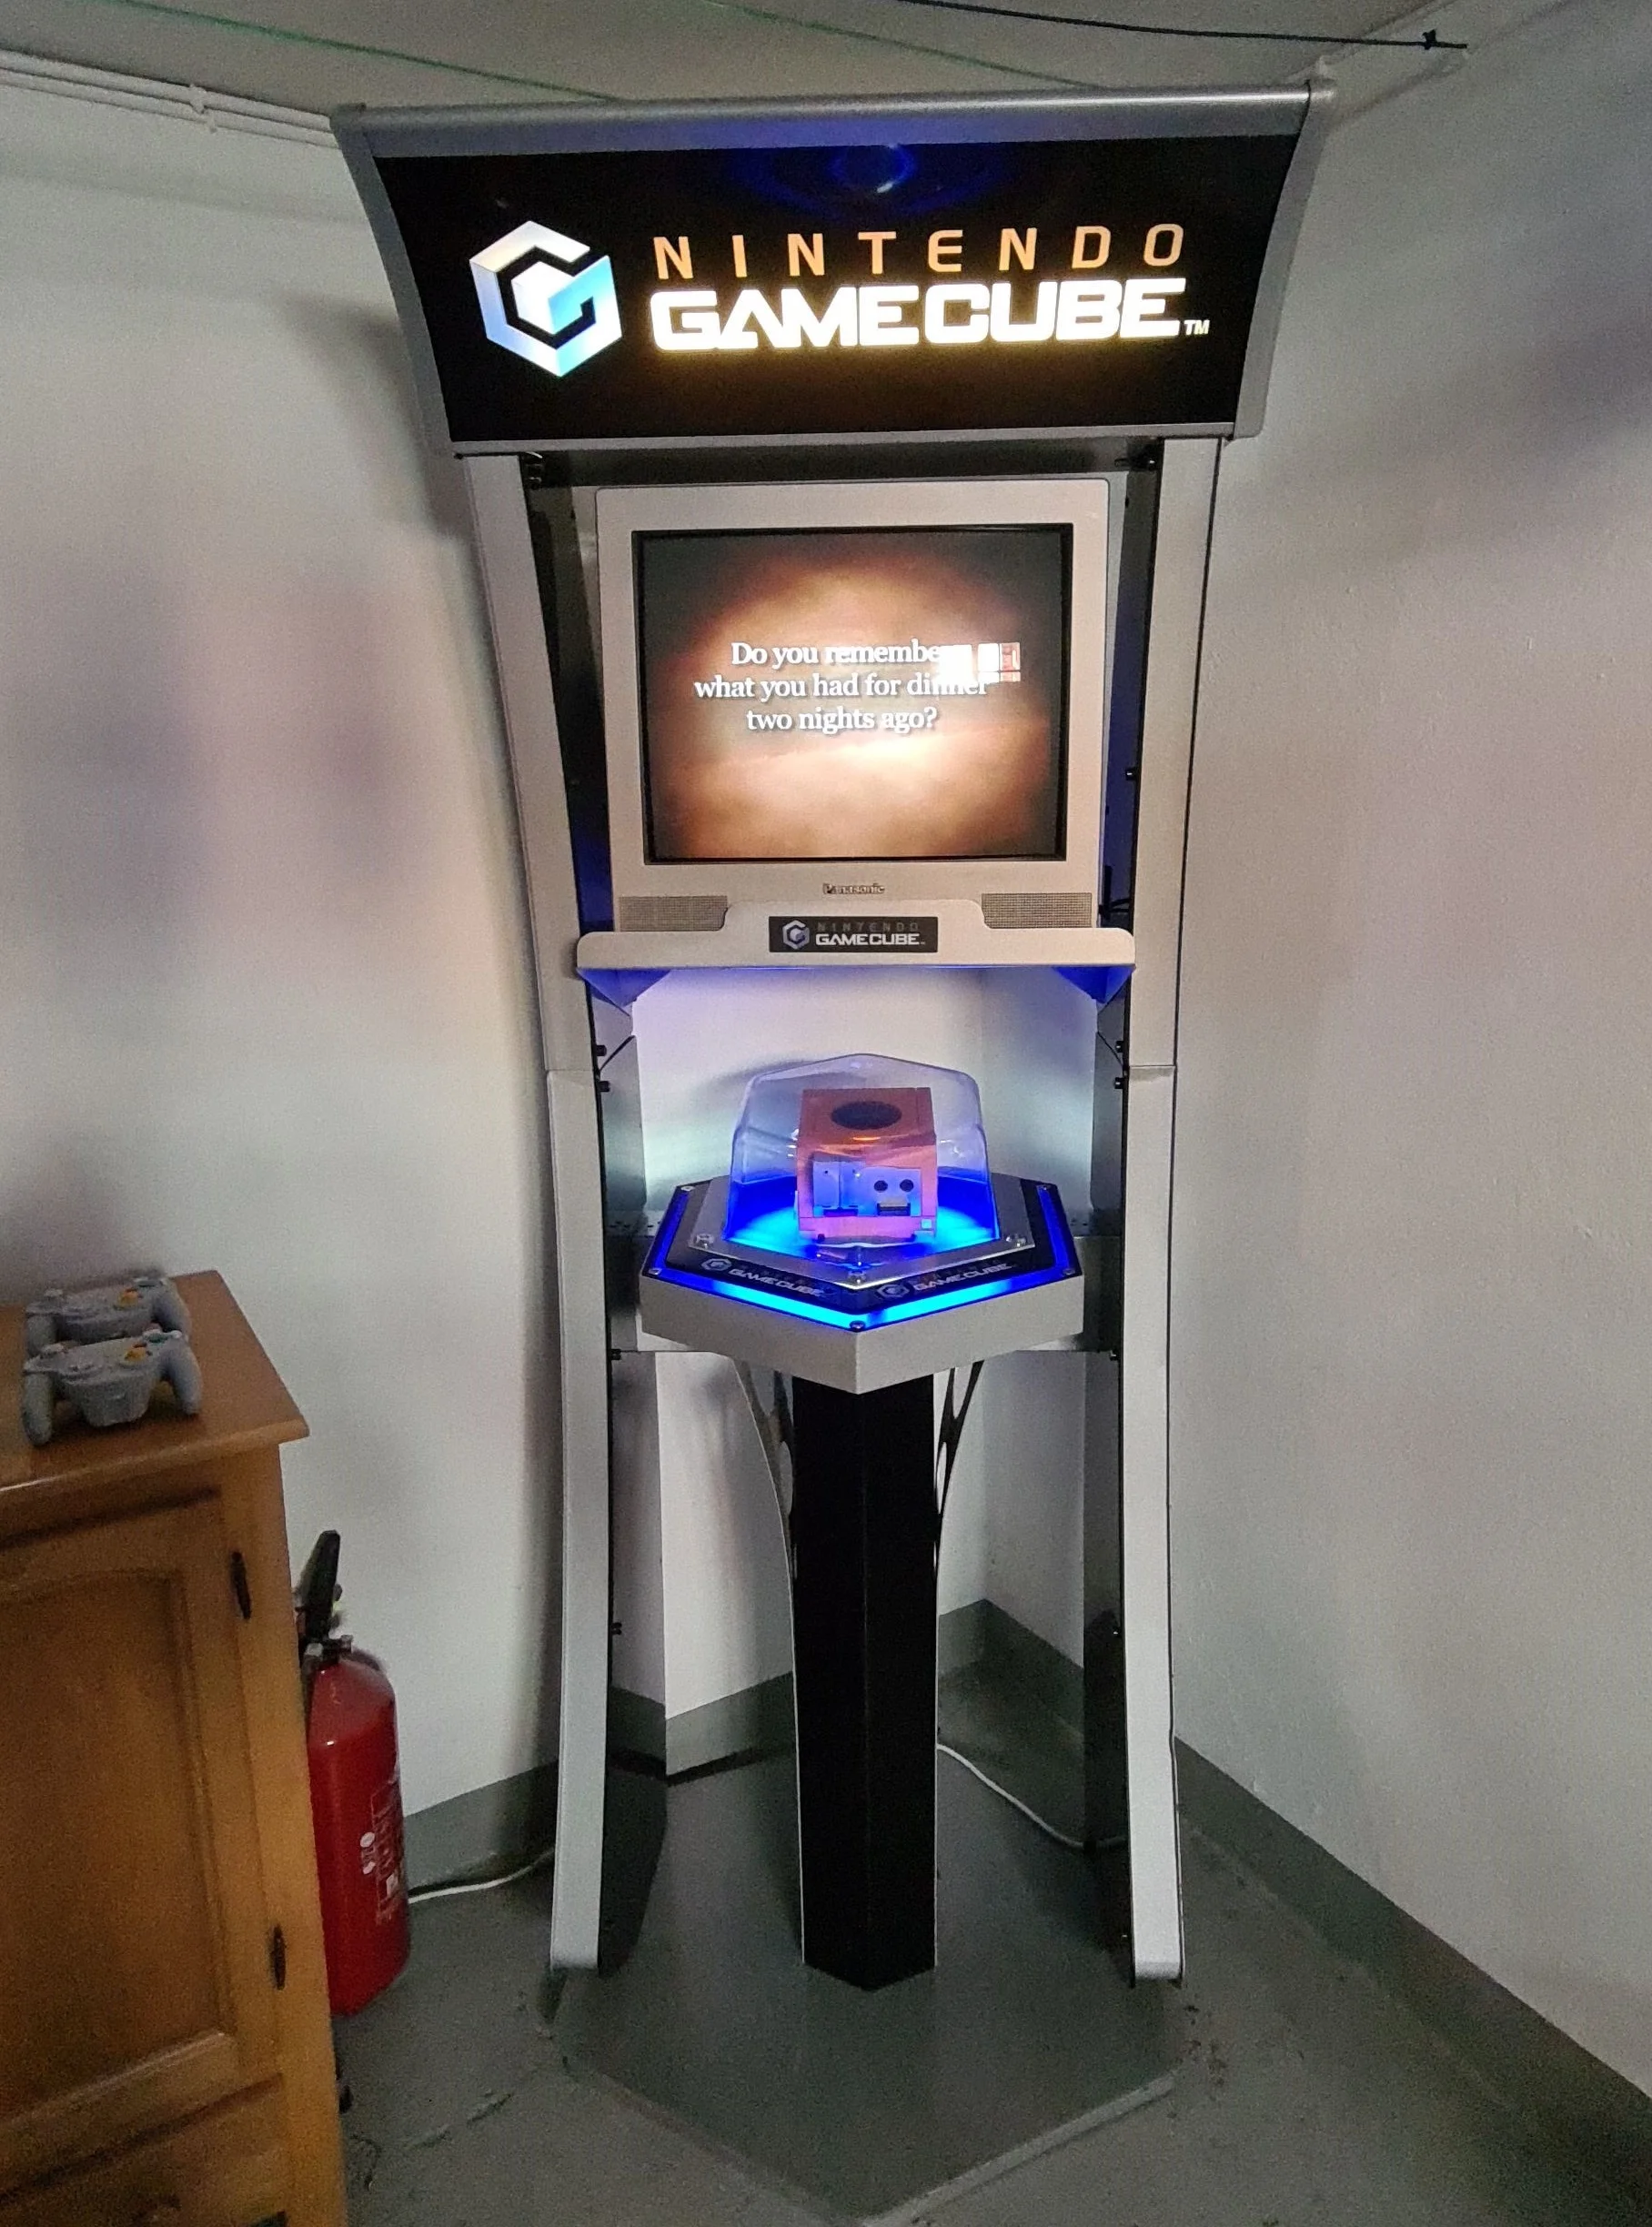  Nintendo GameCube Kiosk [EU]